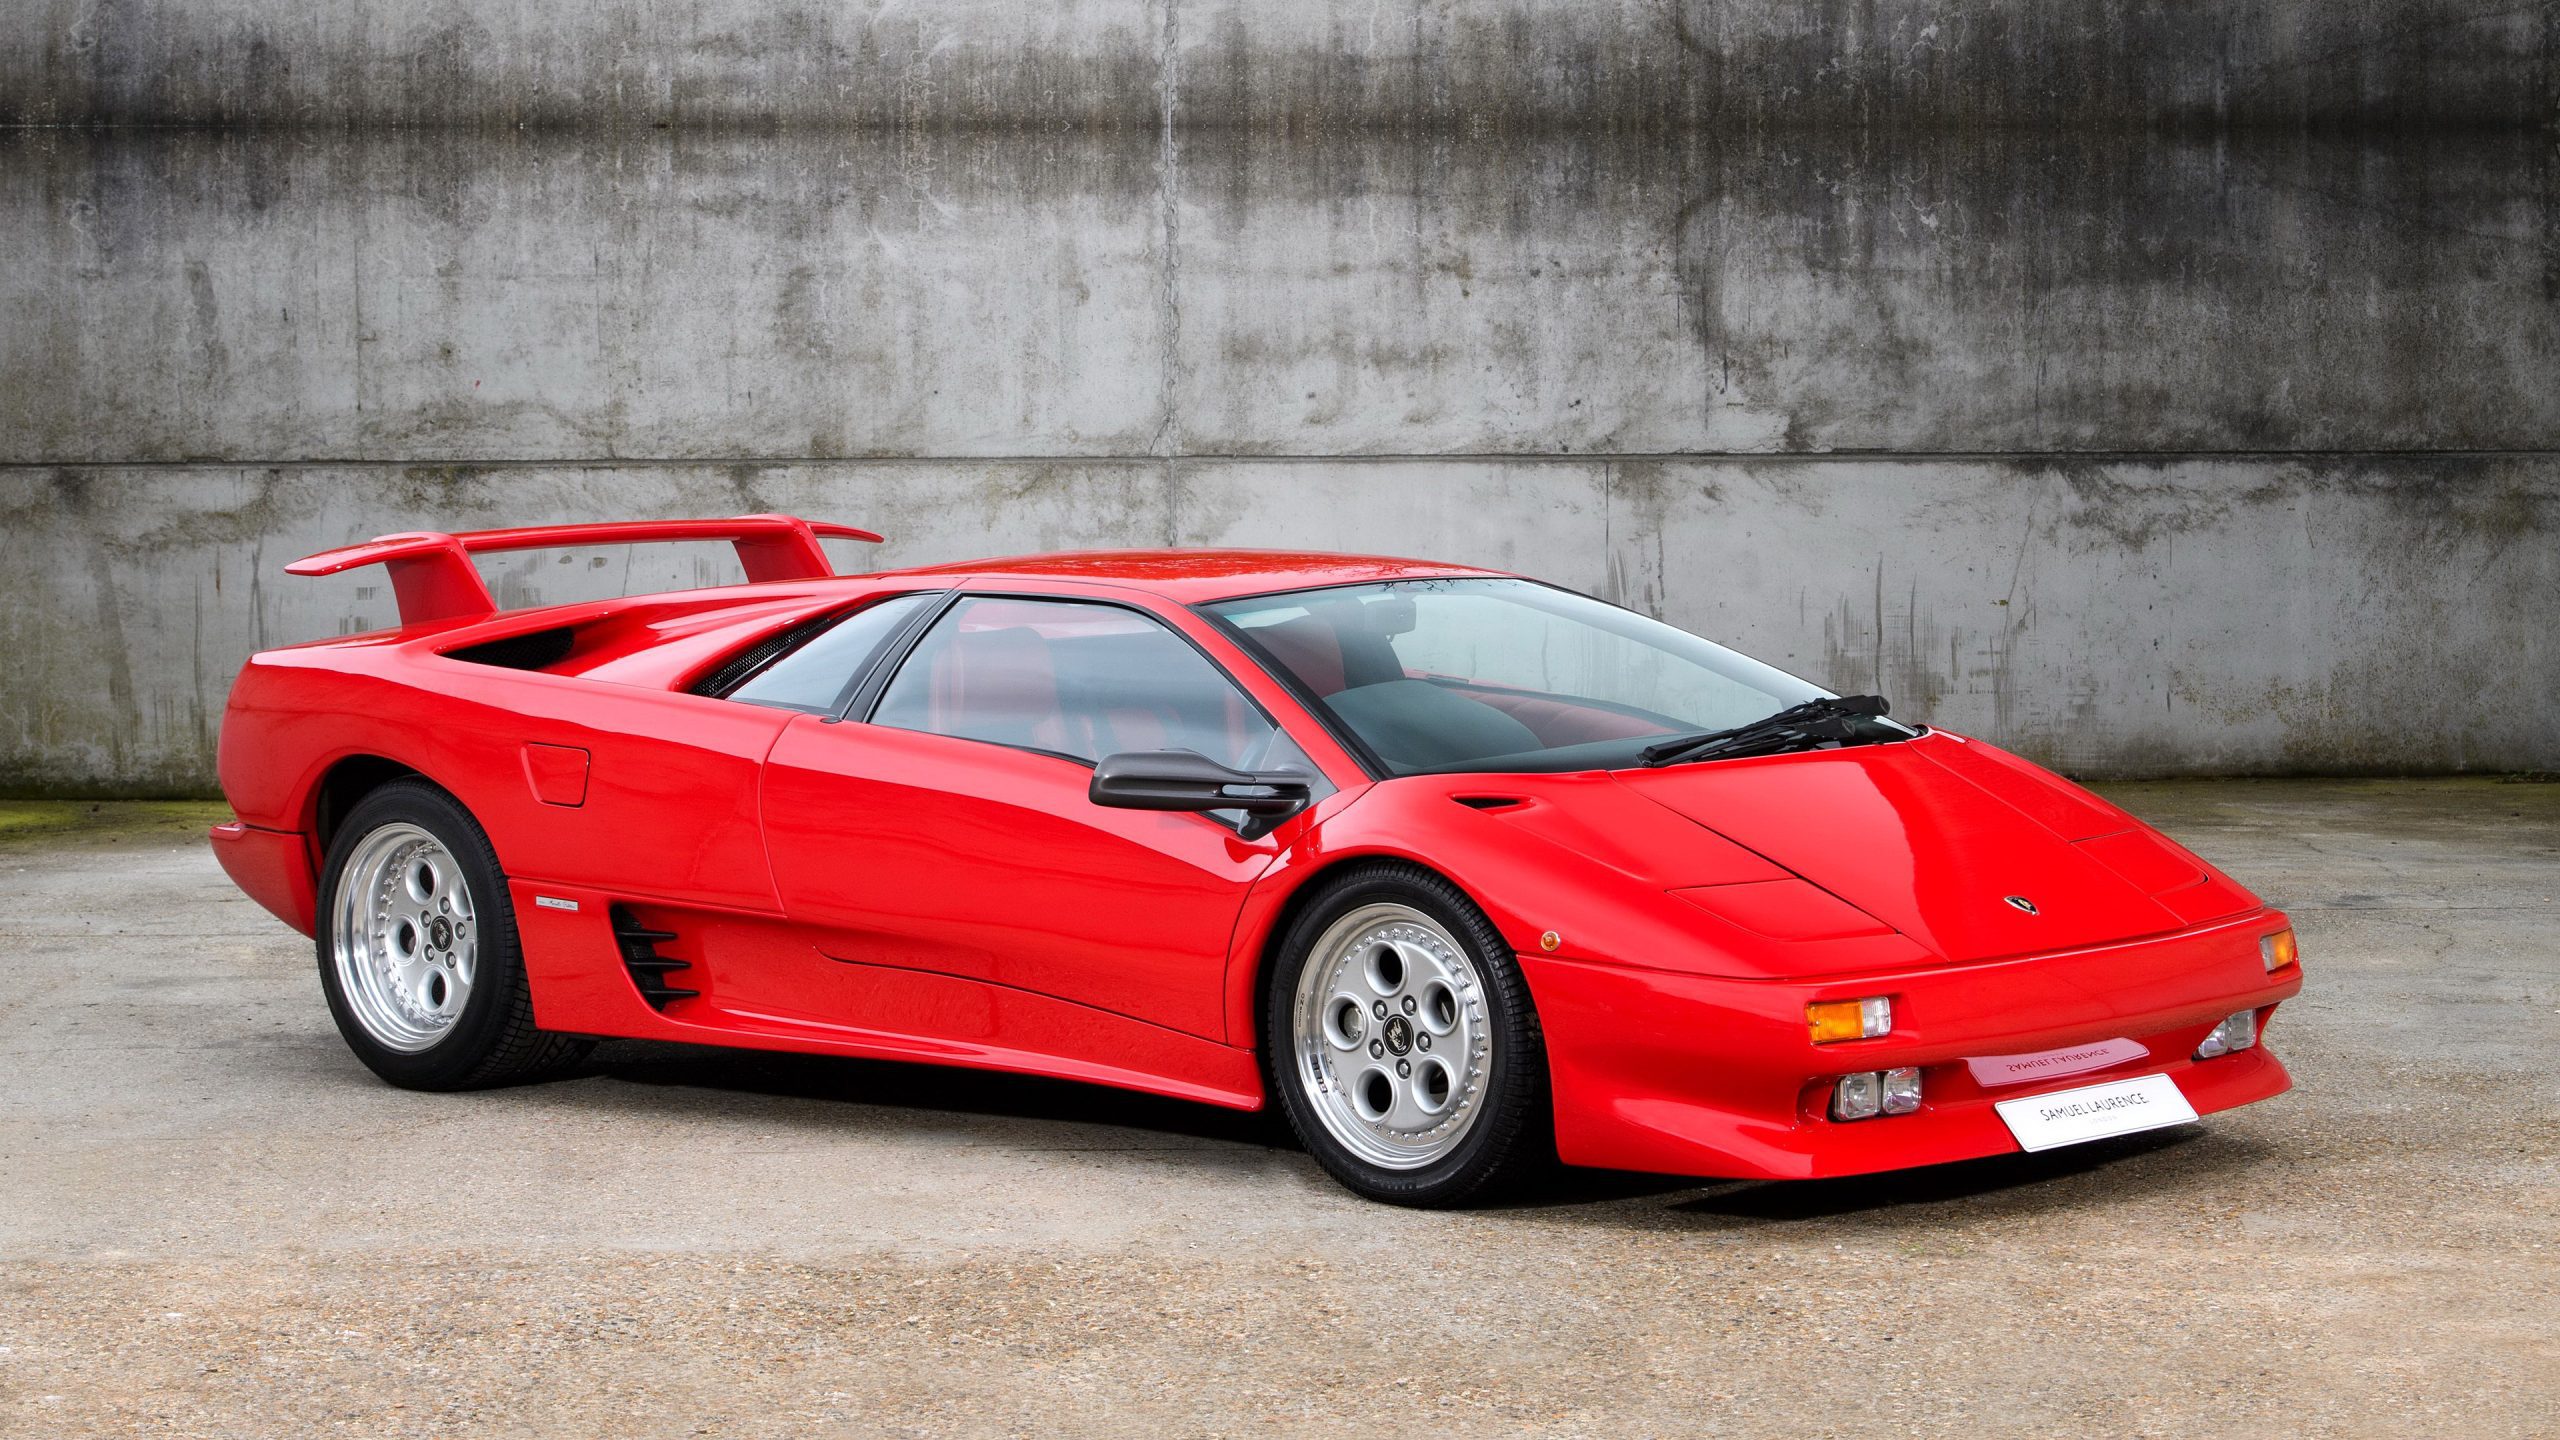 Car Of The Day: 1990 Lamborghini Diablo